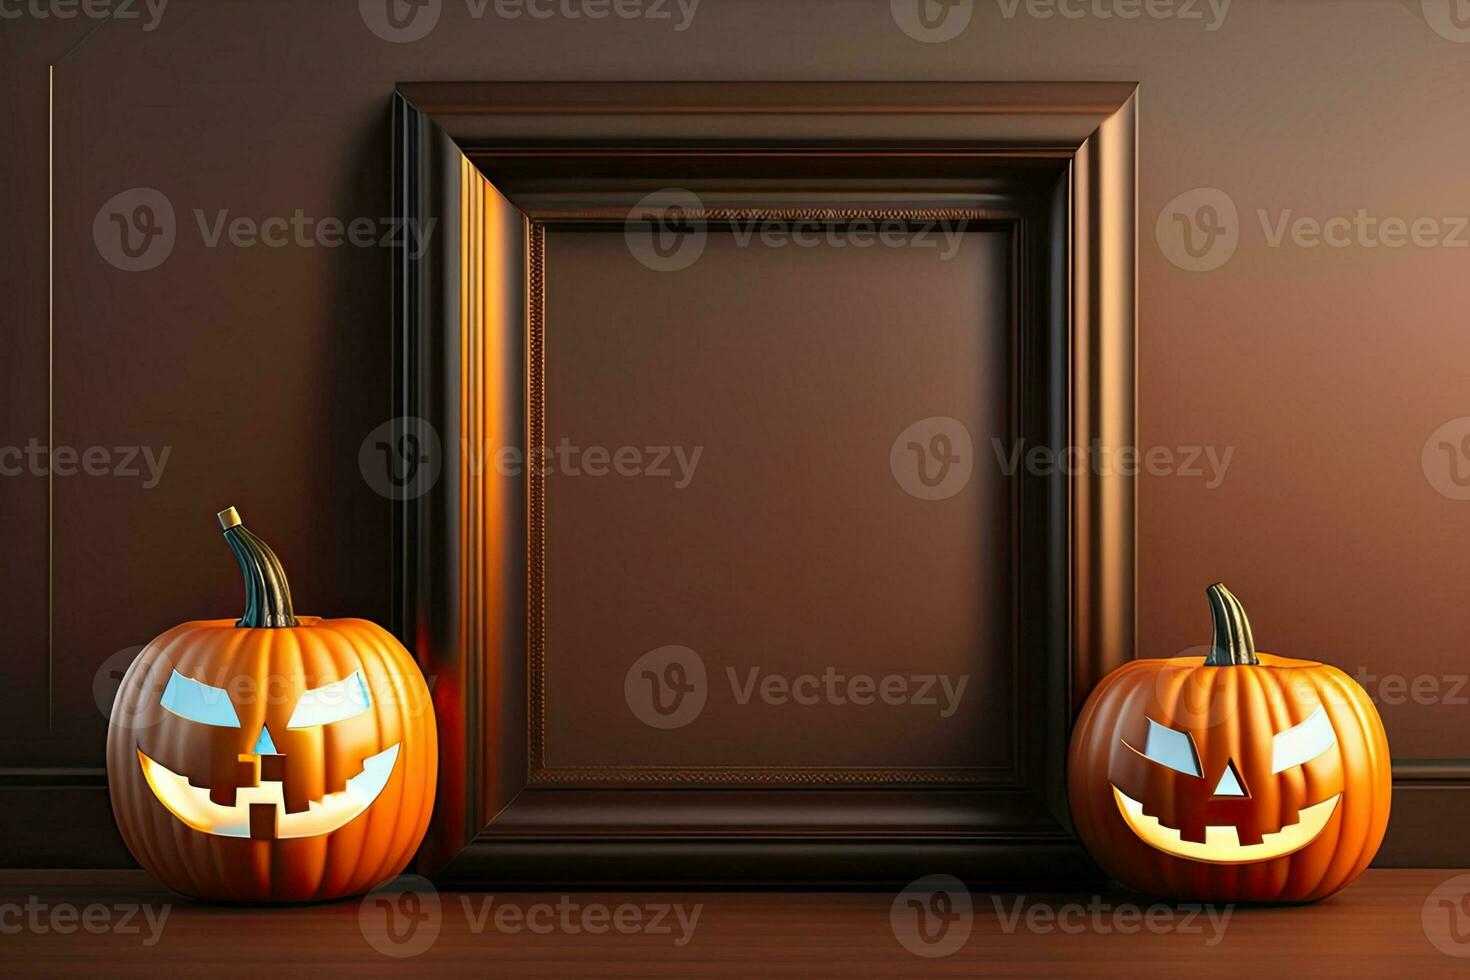 Halloween Frame Background with Pumpkin photo